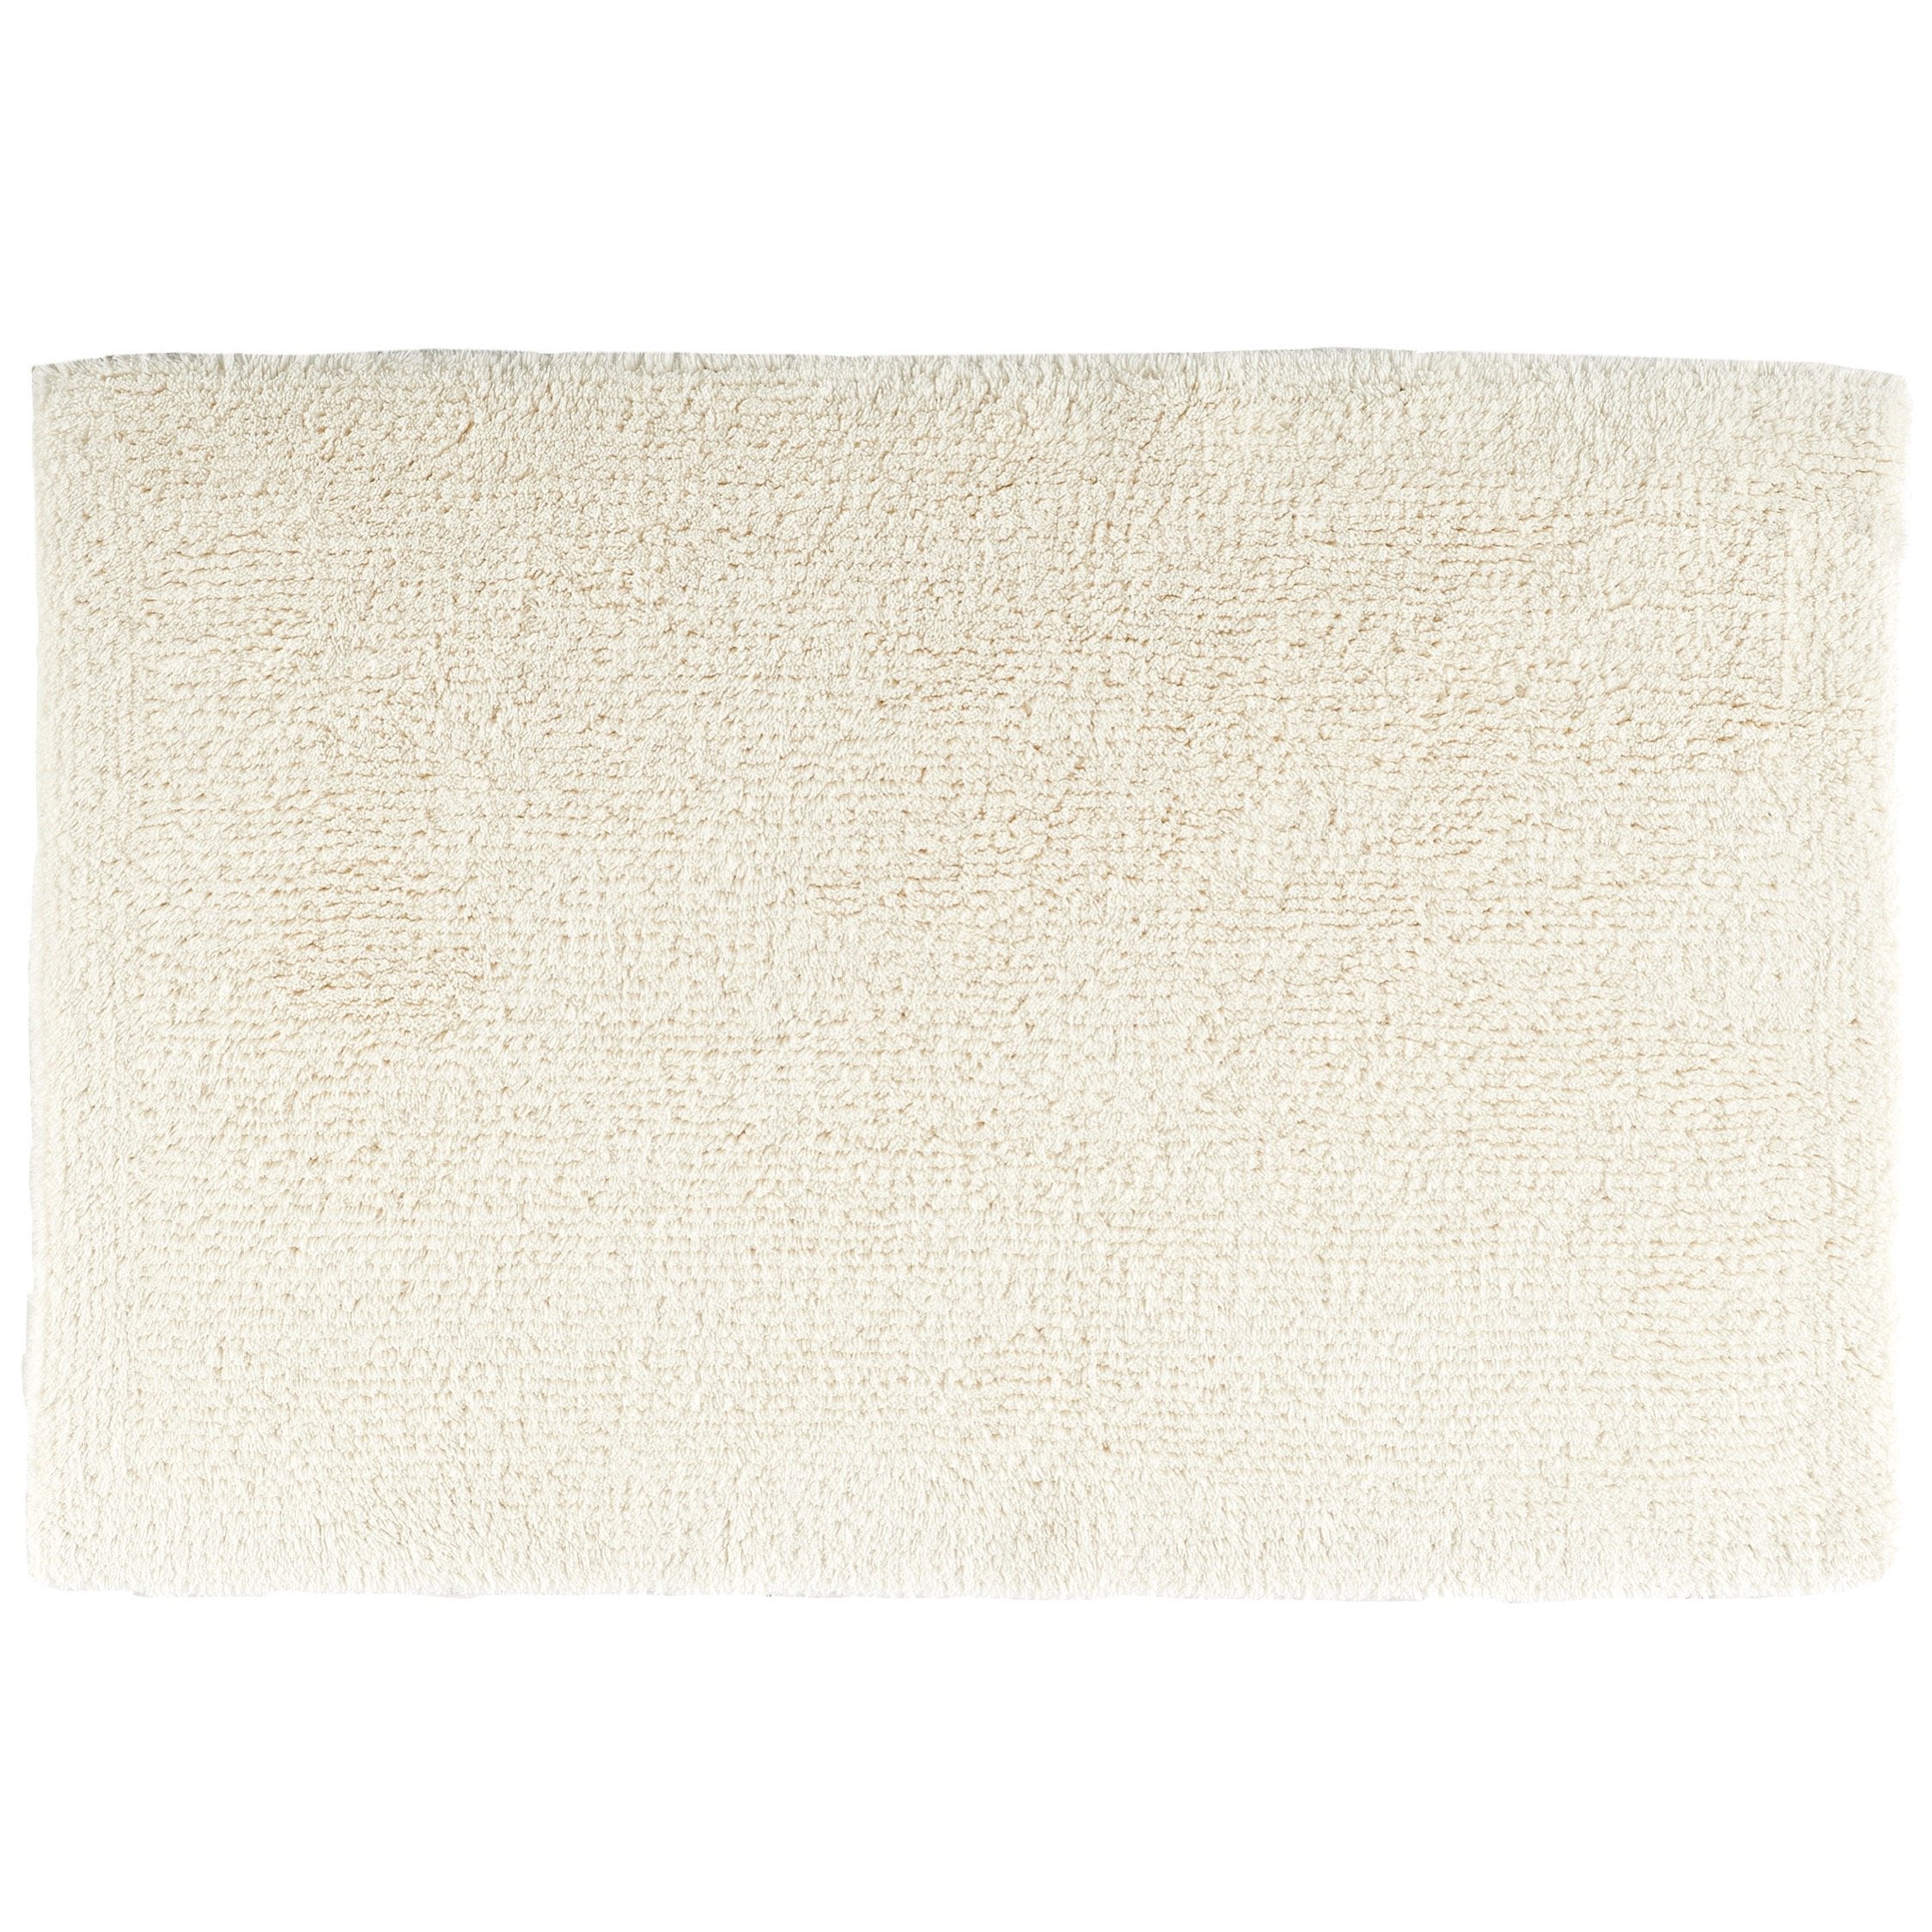 Abyss Super Pile Towels White Color 100-Double Tub Mat, 23x39